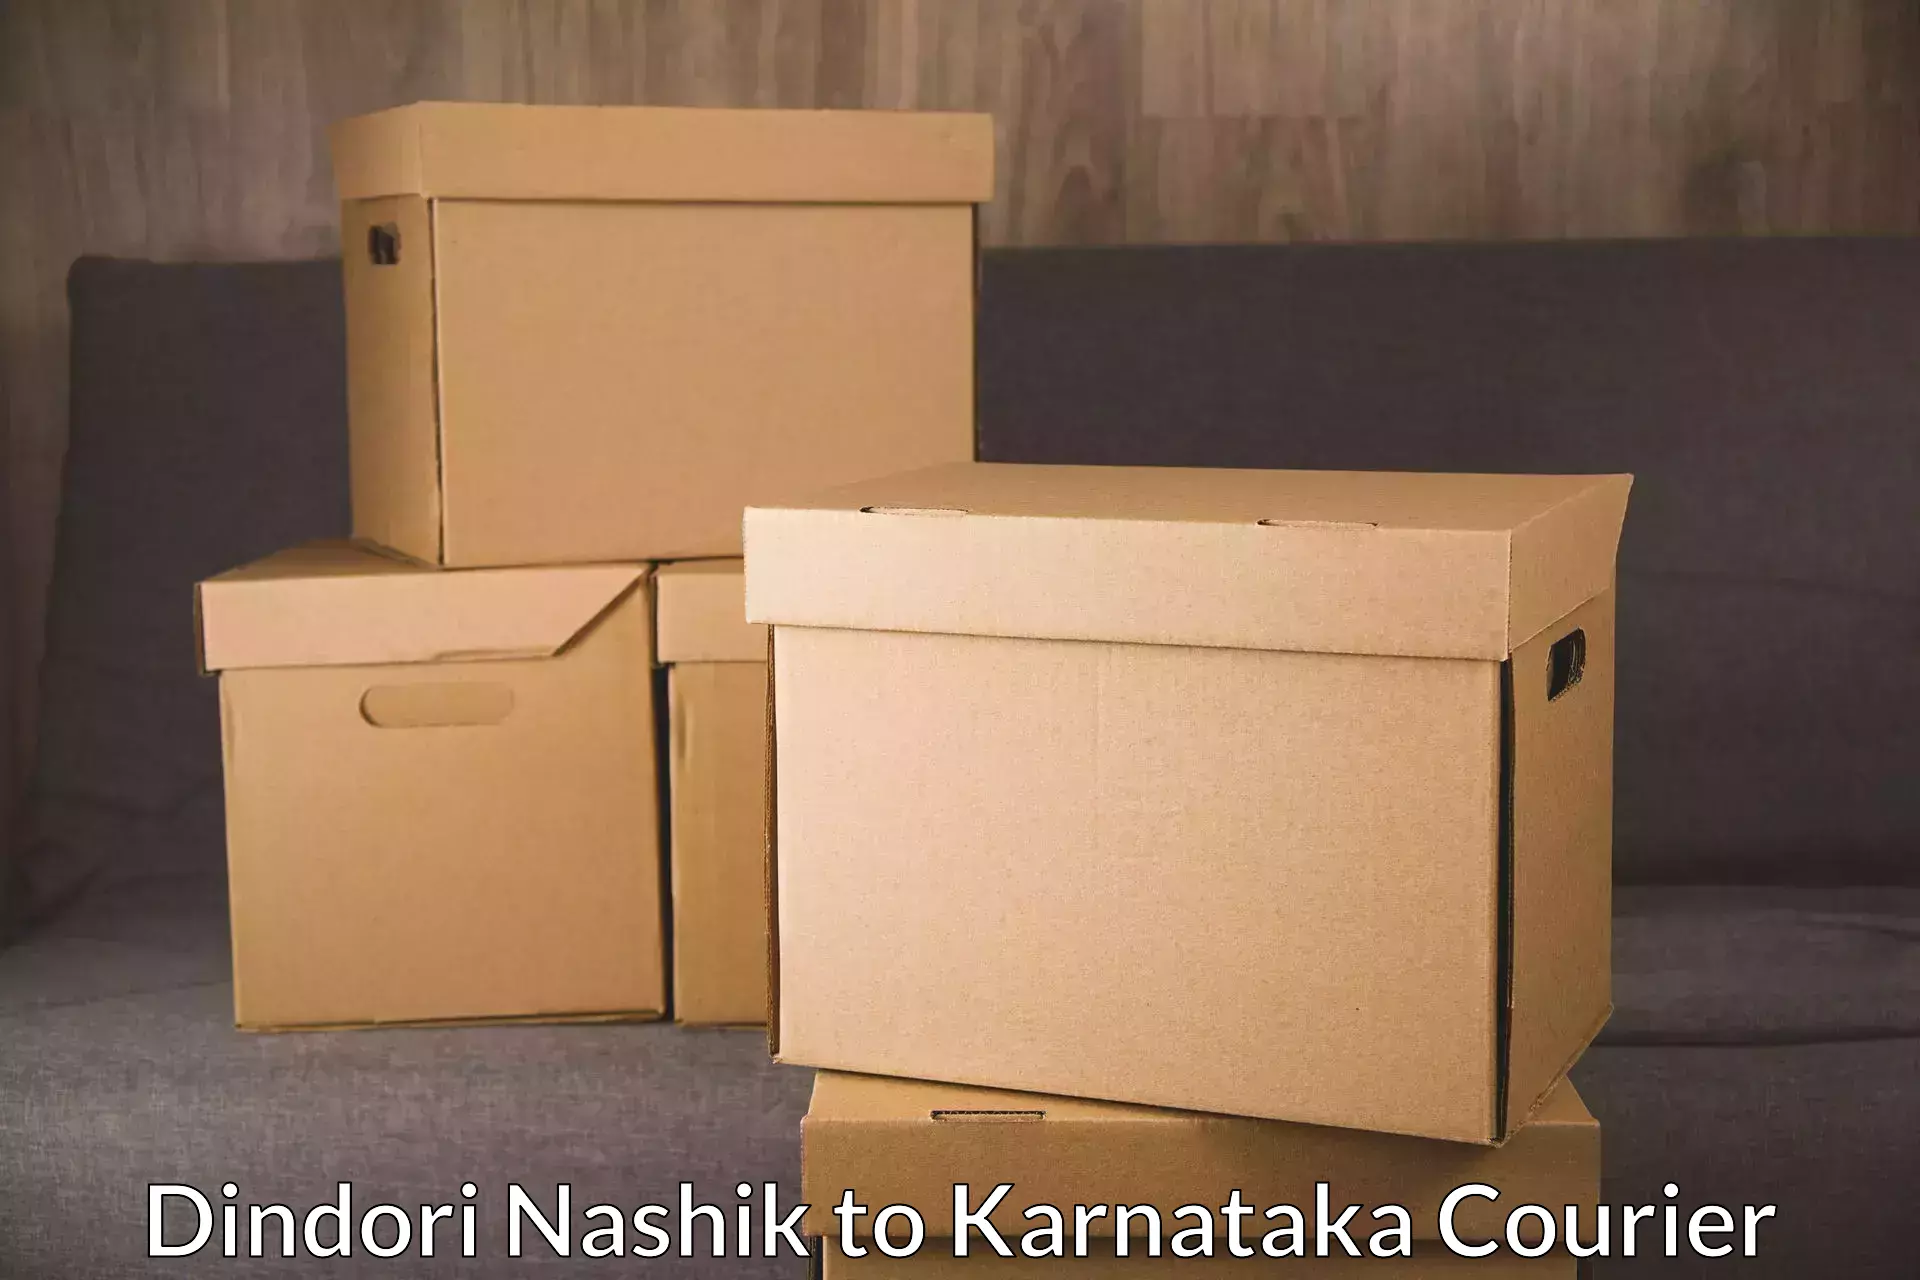 24-hour courier service Dindori Nashik to Yellapur